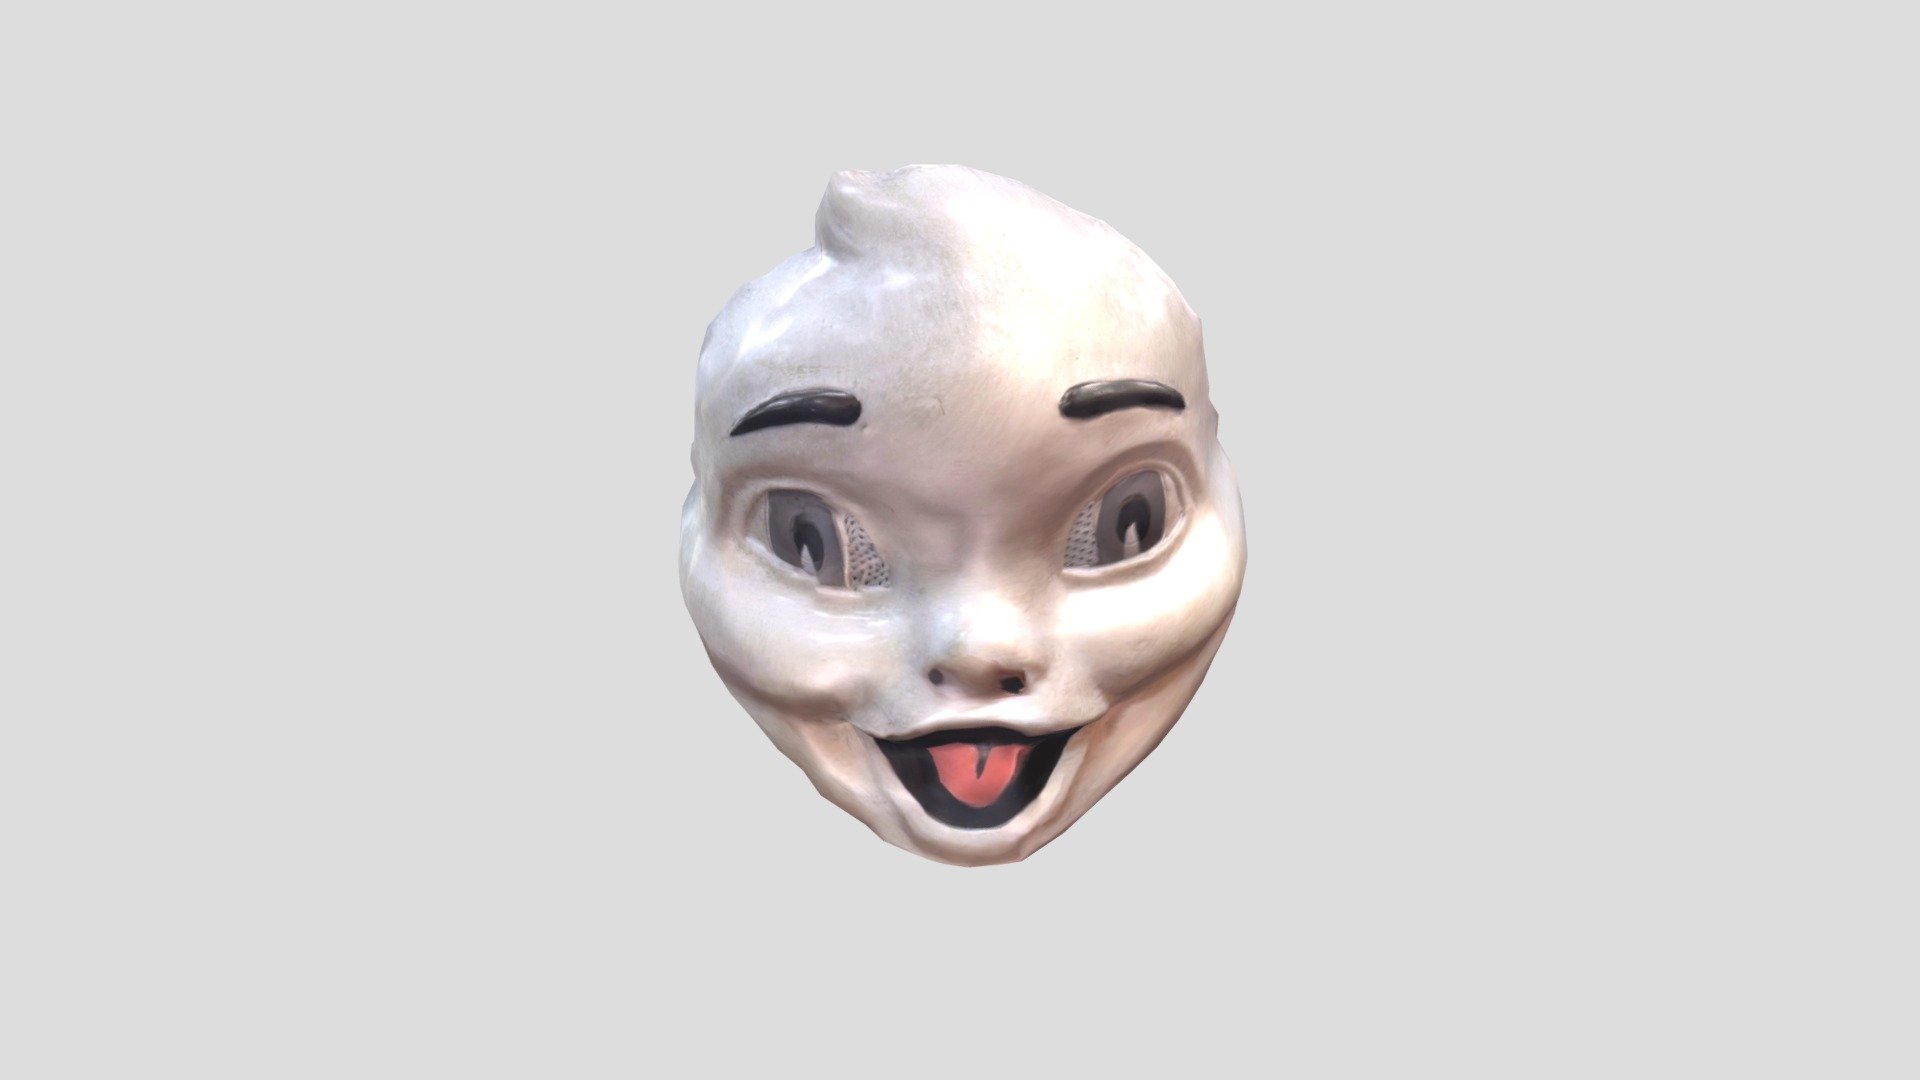 👻 Creepy Smile Face (3D) 👻